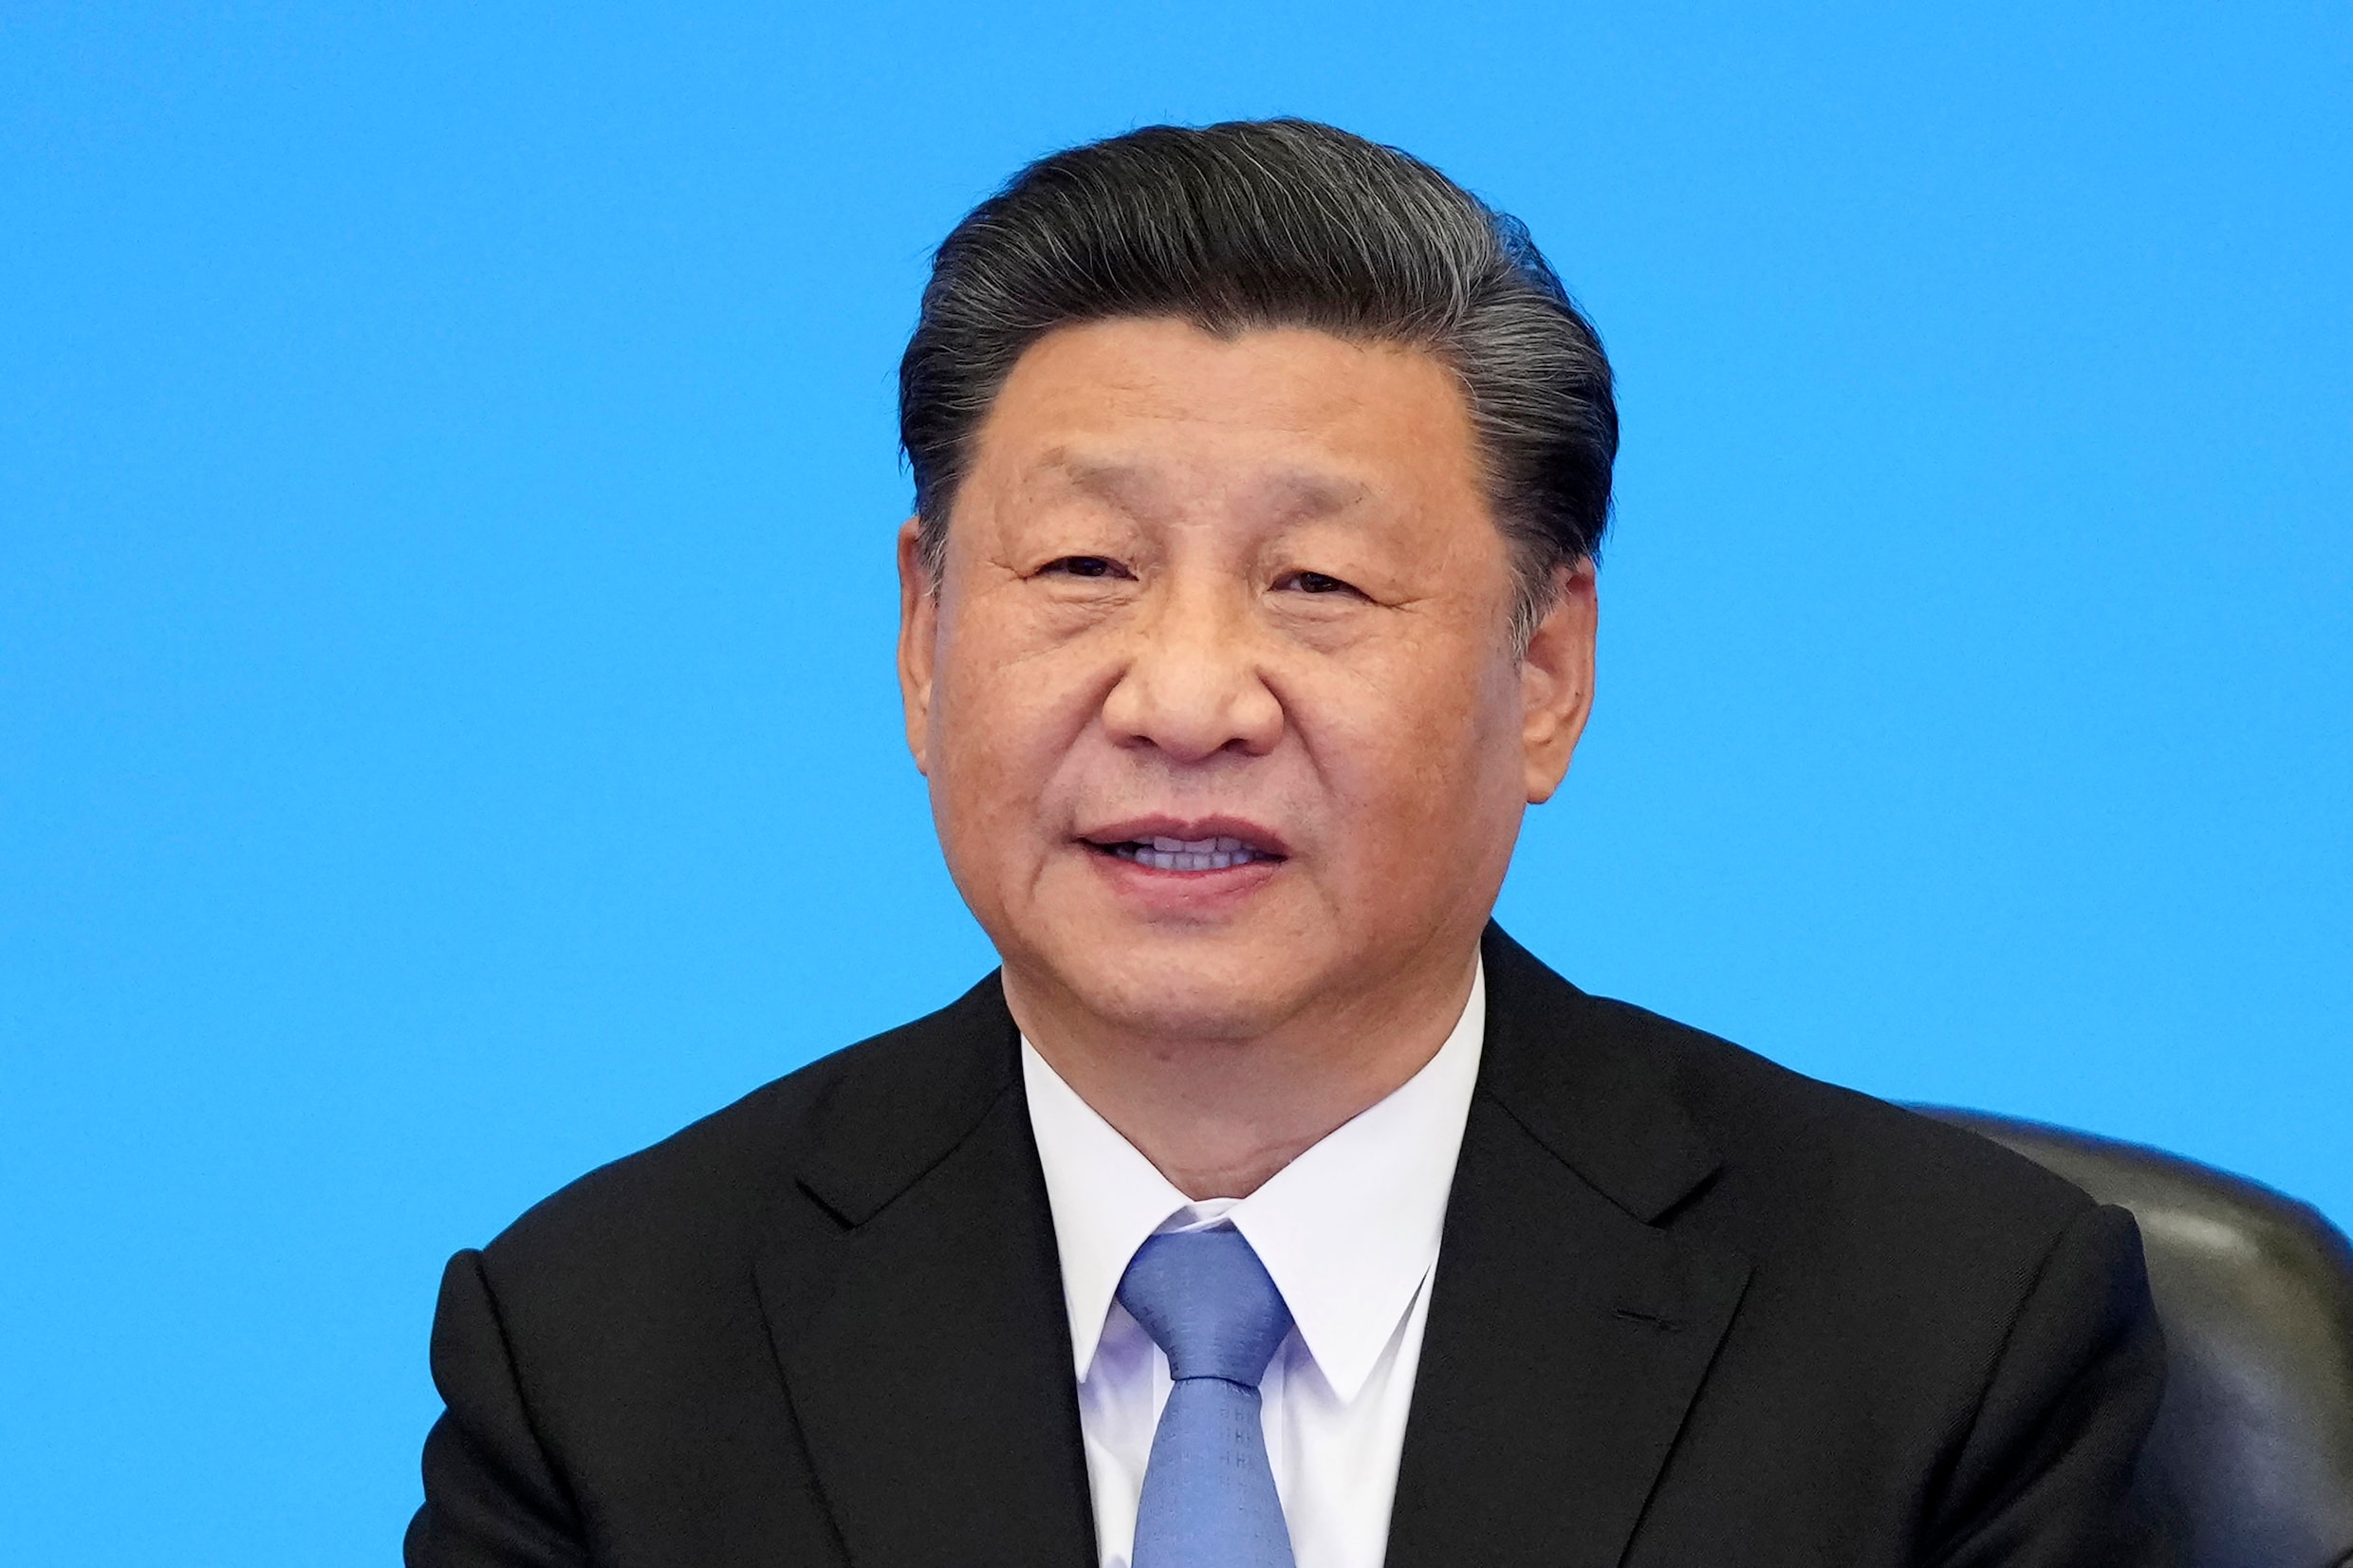 Dengan ‘kemakmuran bersama’, Xi ingin mengatasi kesenjangan ekstrim di Tiongkok